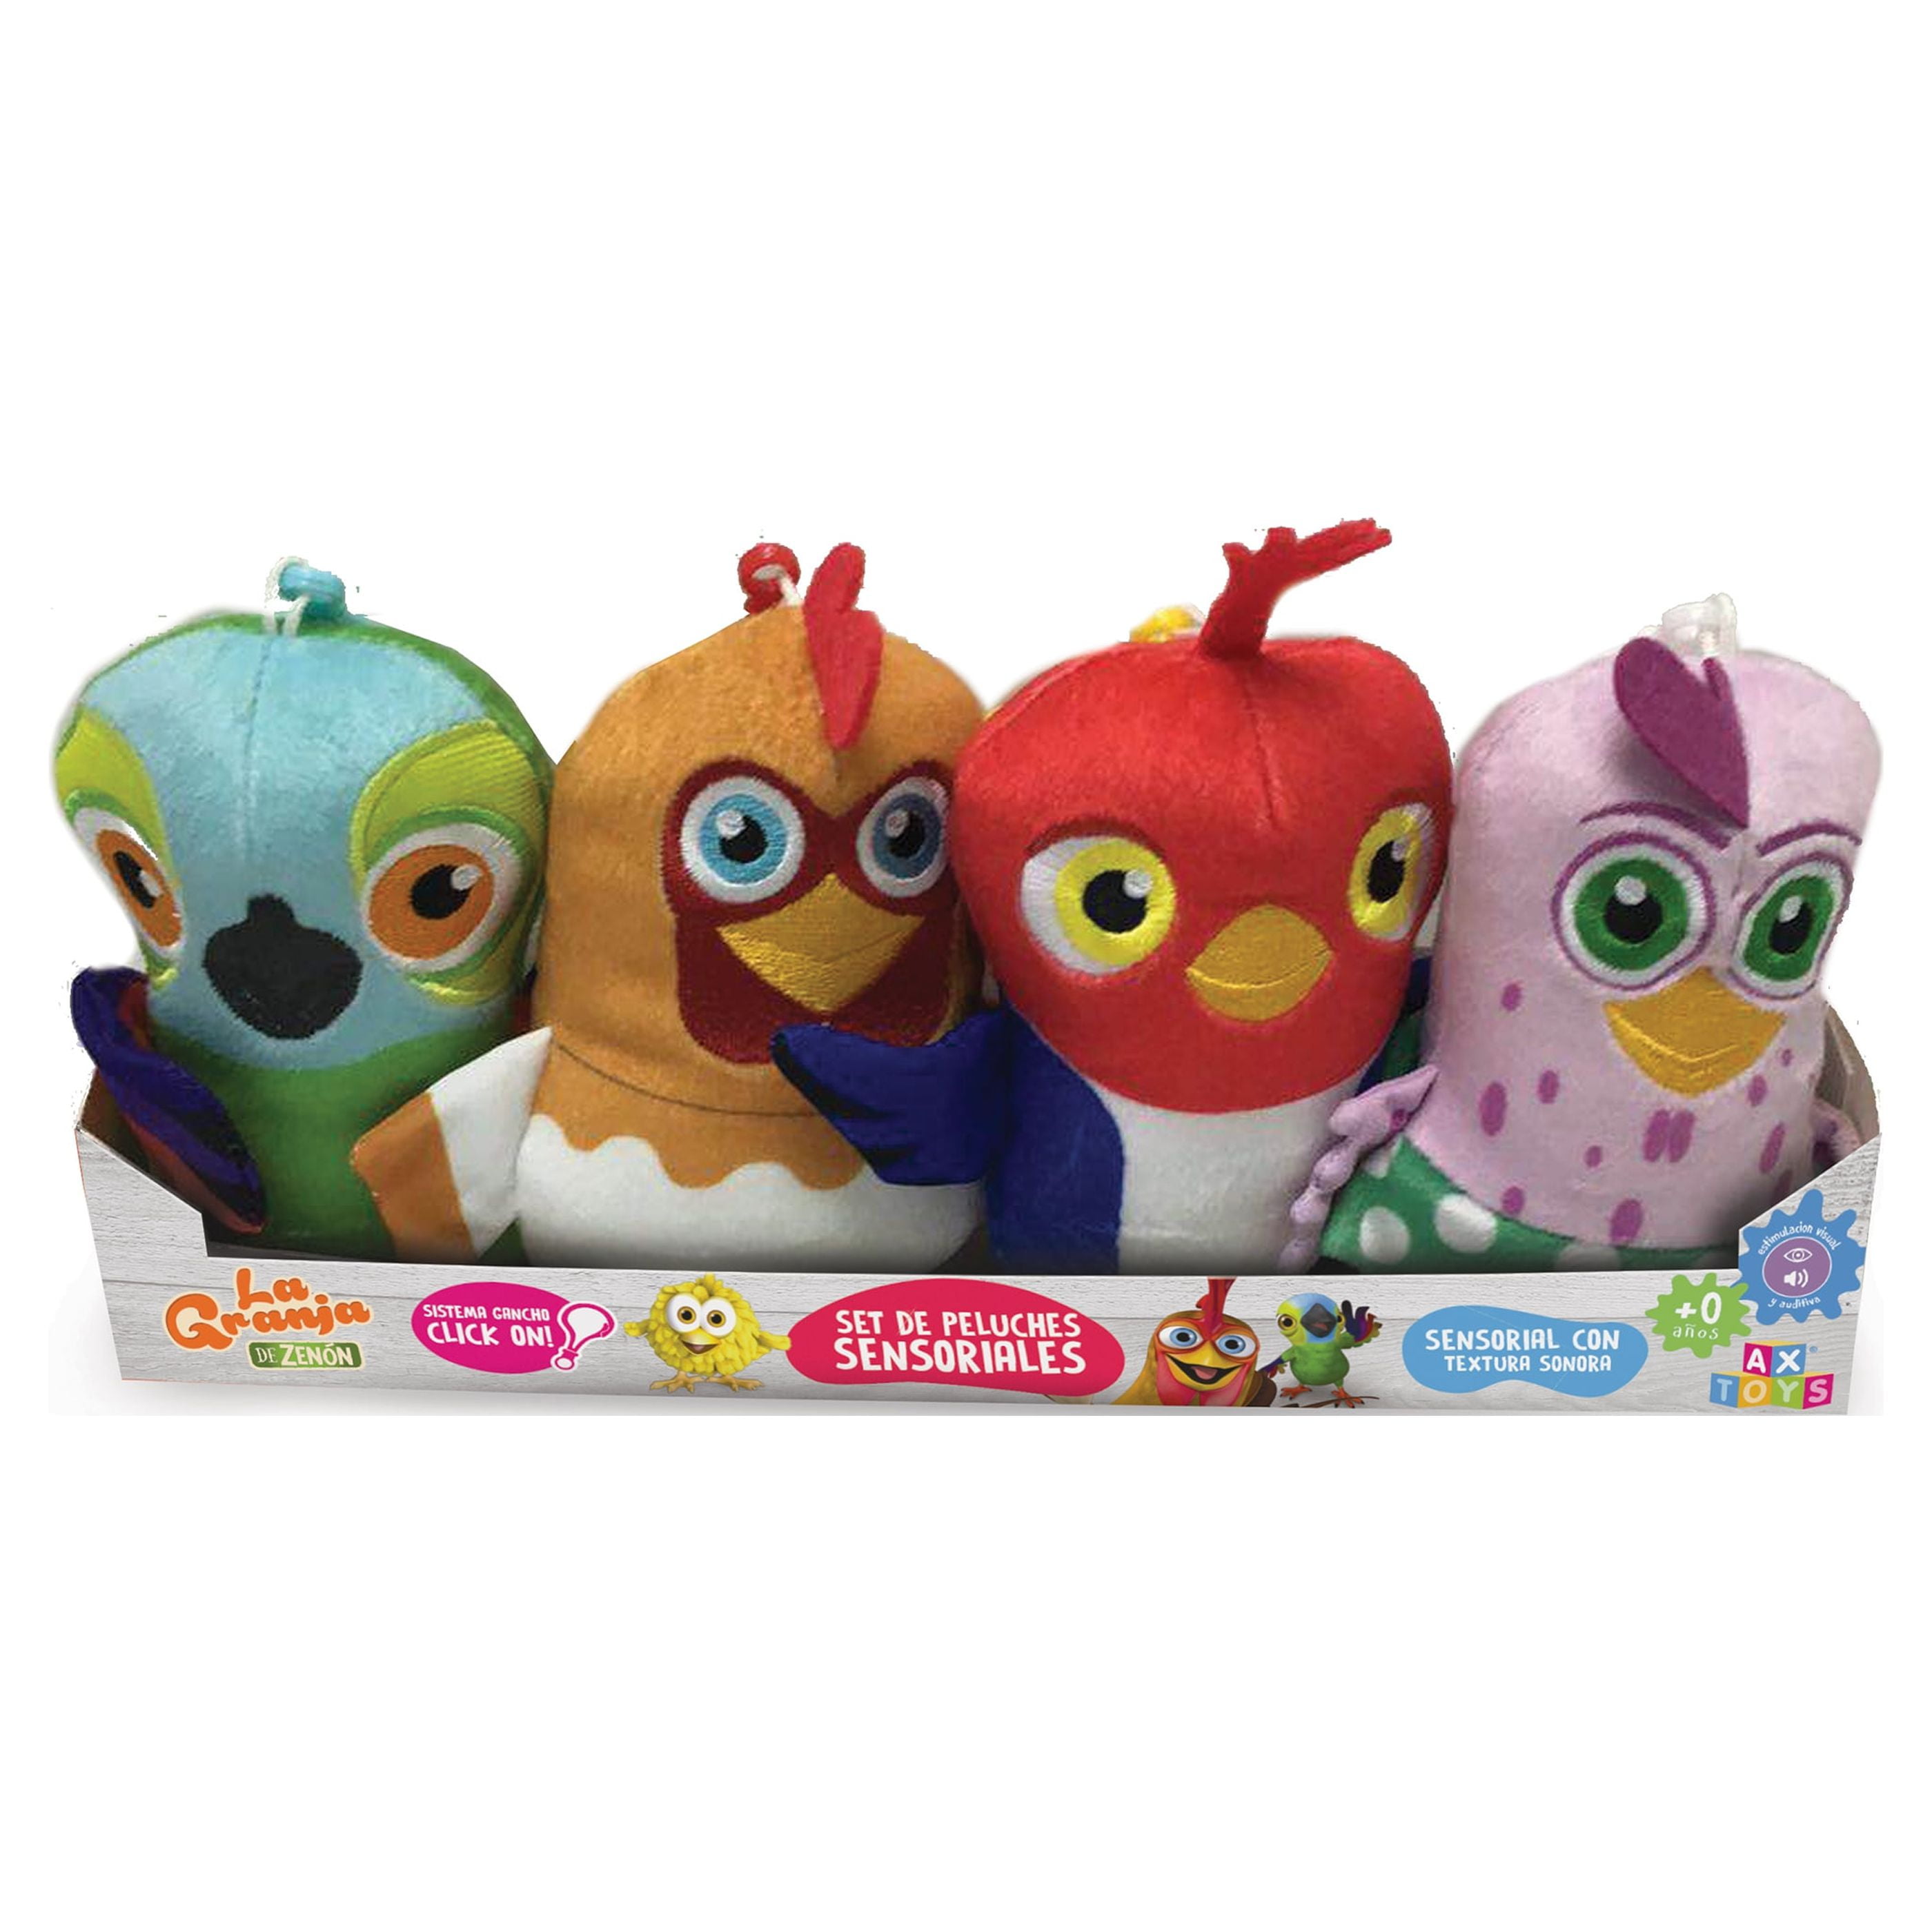 La Granja de Zenon Infant Baby Sensorial 6 Plush Toys, 4 Pack